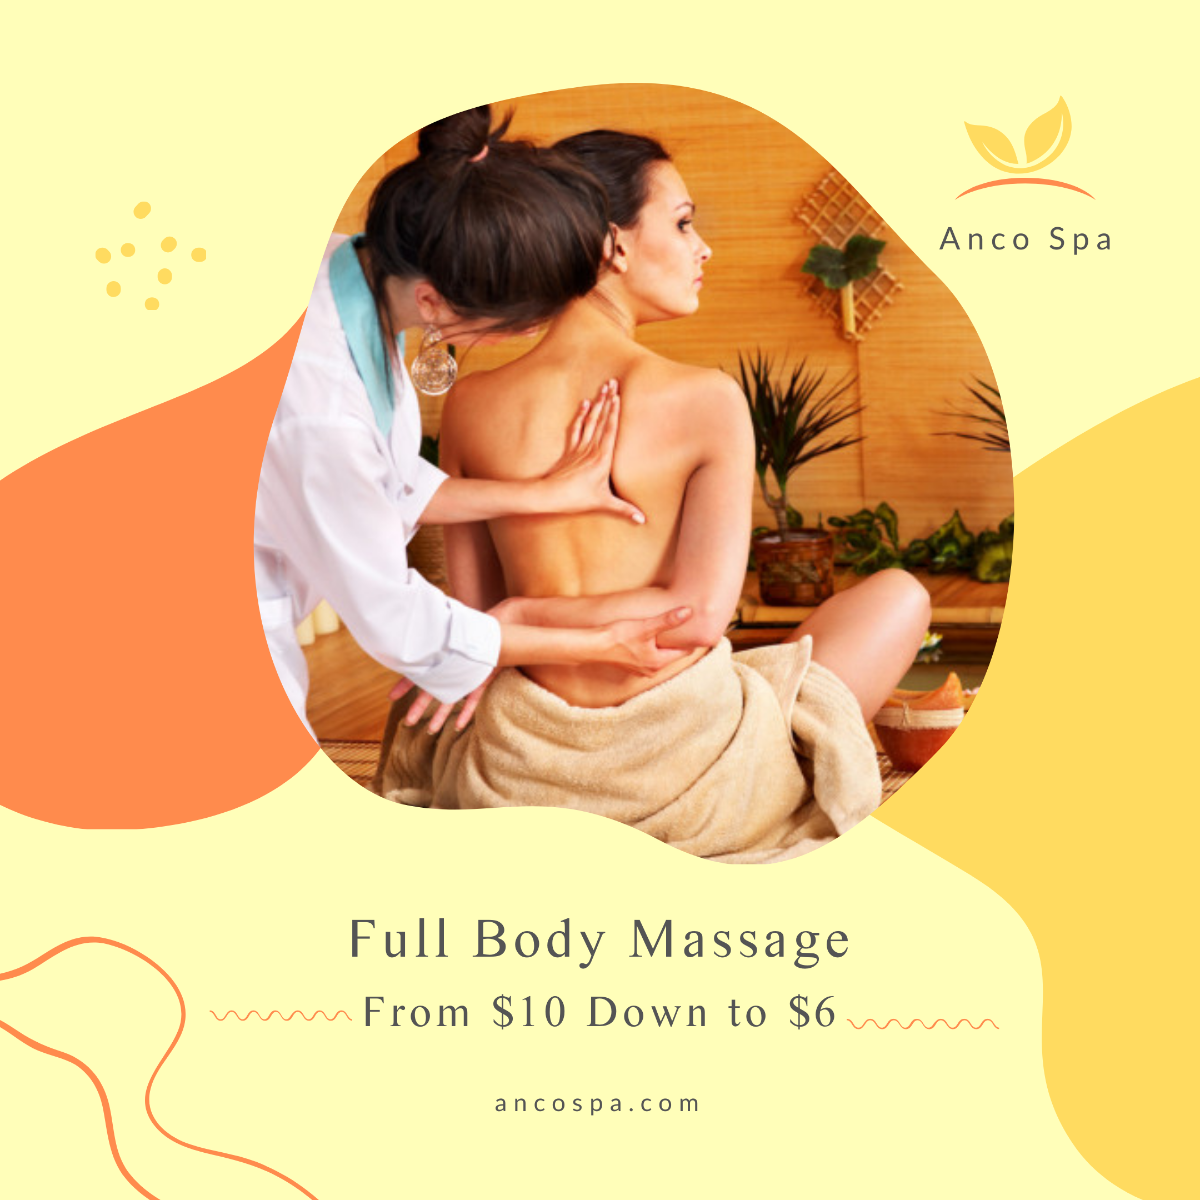 Free Full Body Massage Offer Post, Instagram, Facebook Template